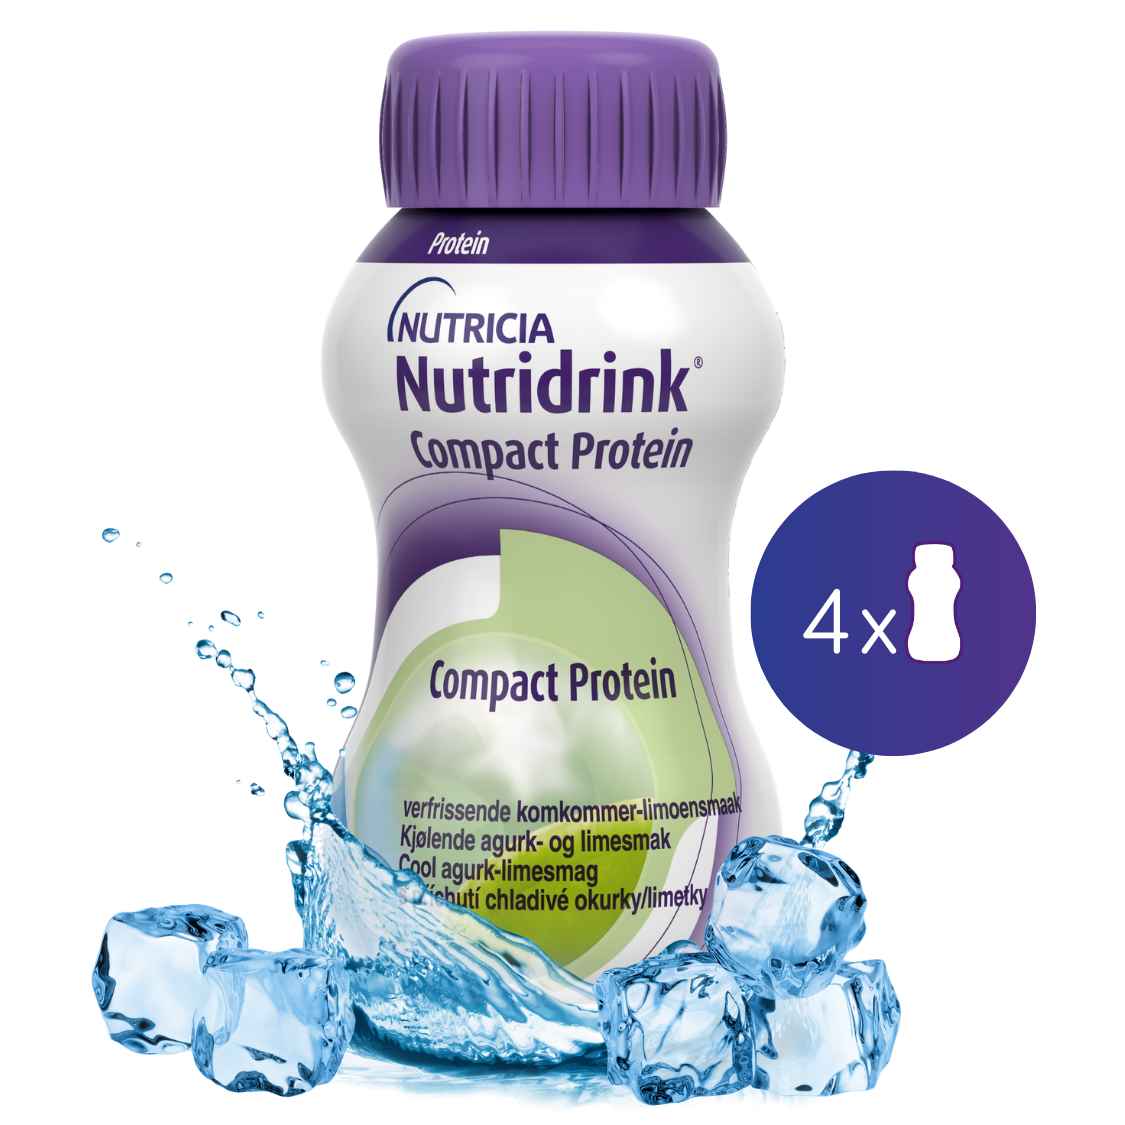 Nutridrink Compact Protein chladivá okurka a limetka 4x125 ml Nutridrink